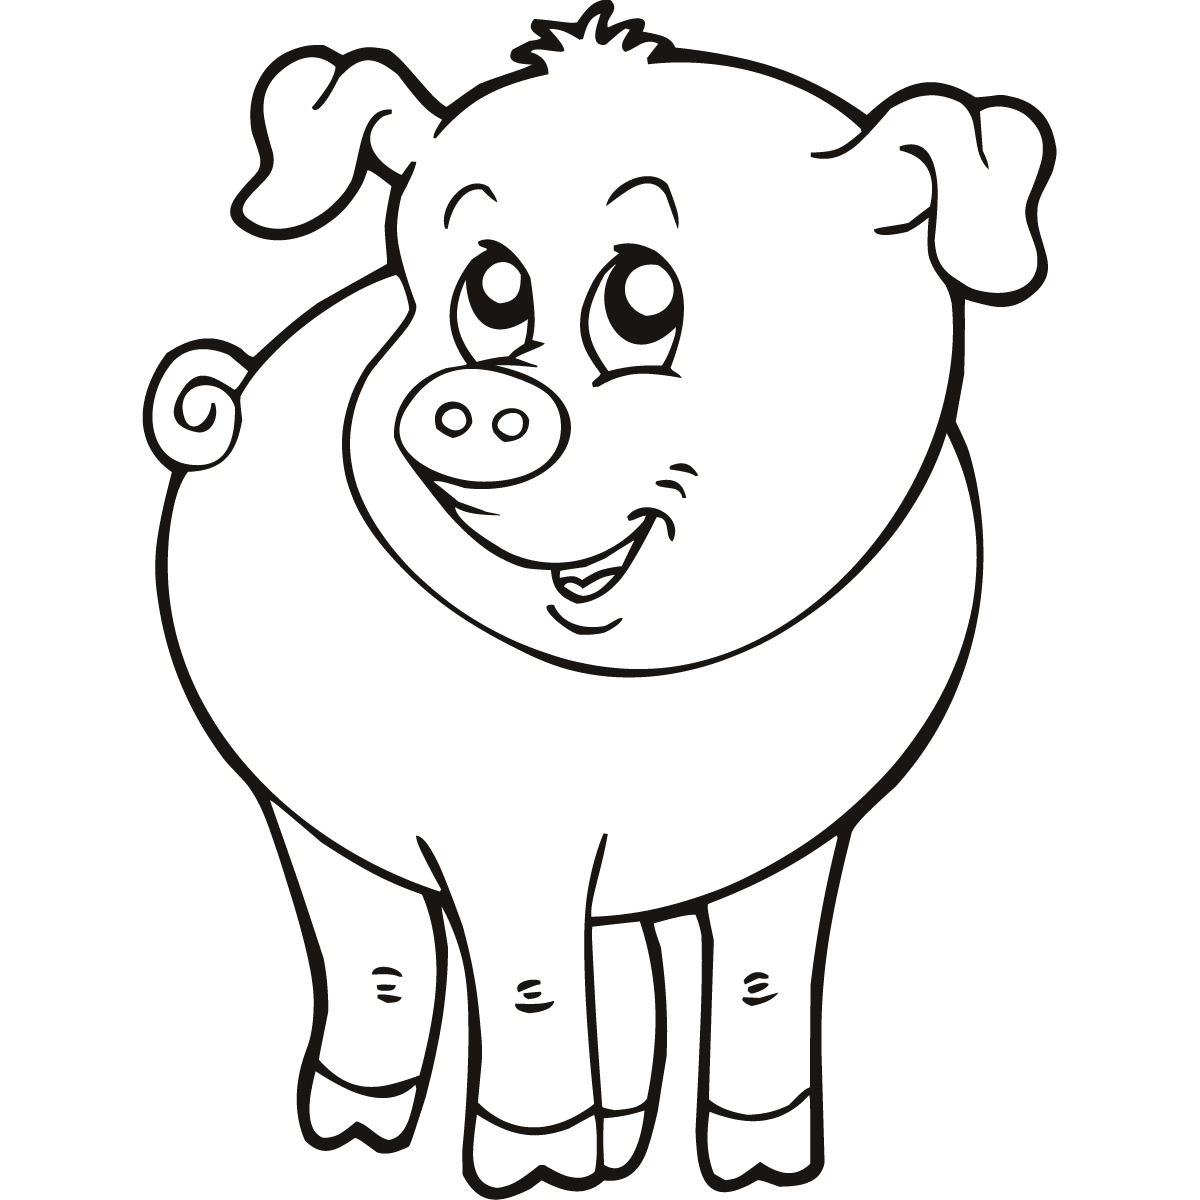 Free Farm Animal Drawings, Download Free Clip Art, Free Clip